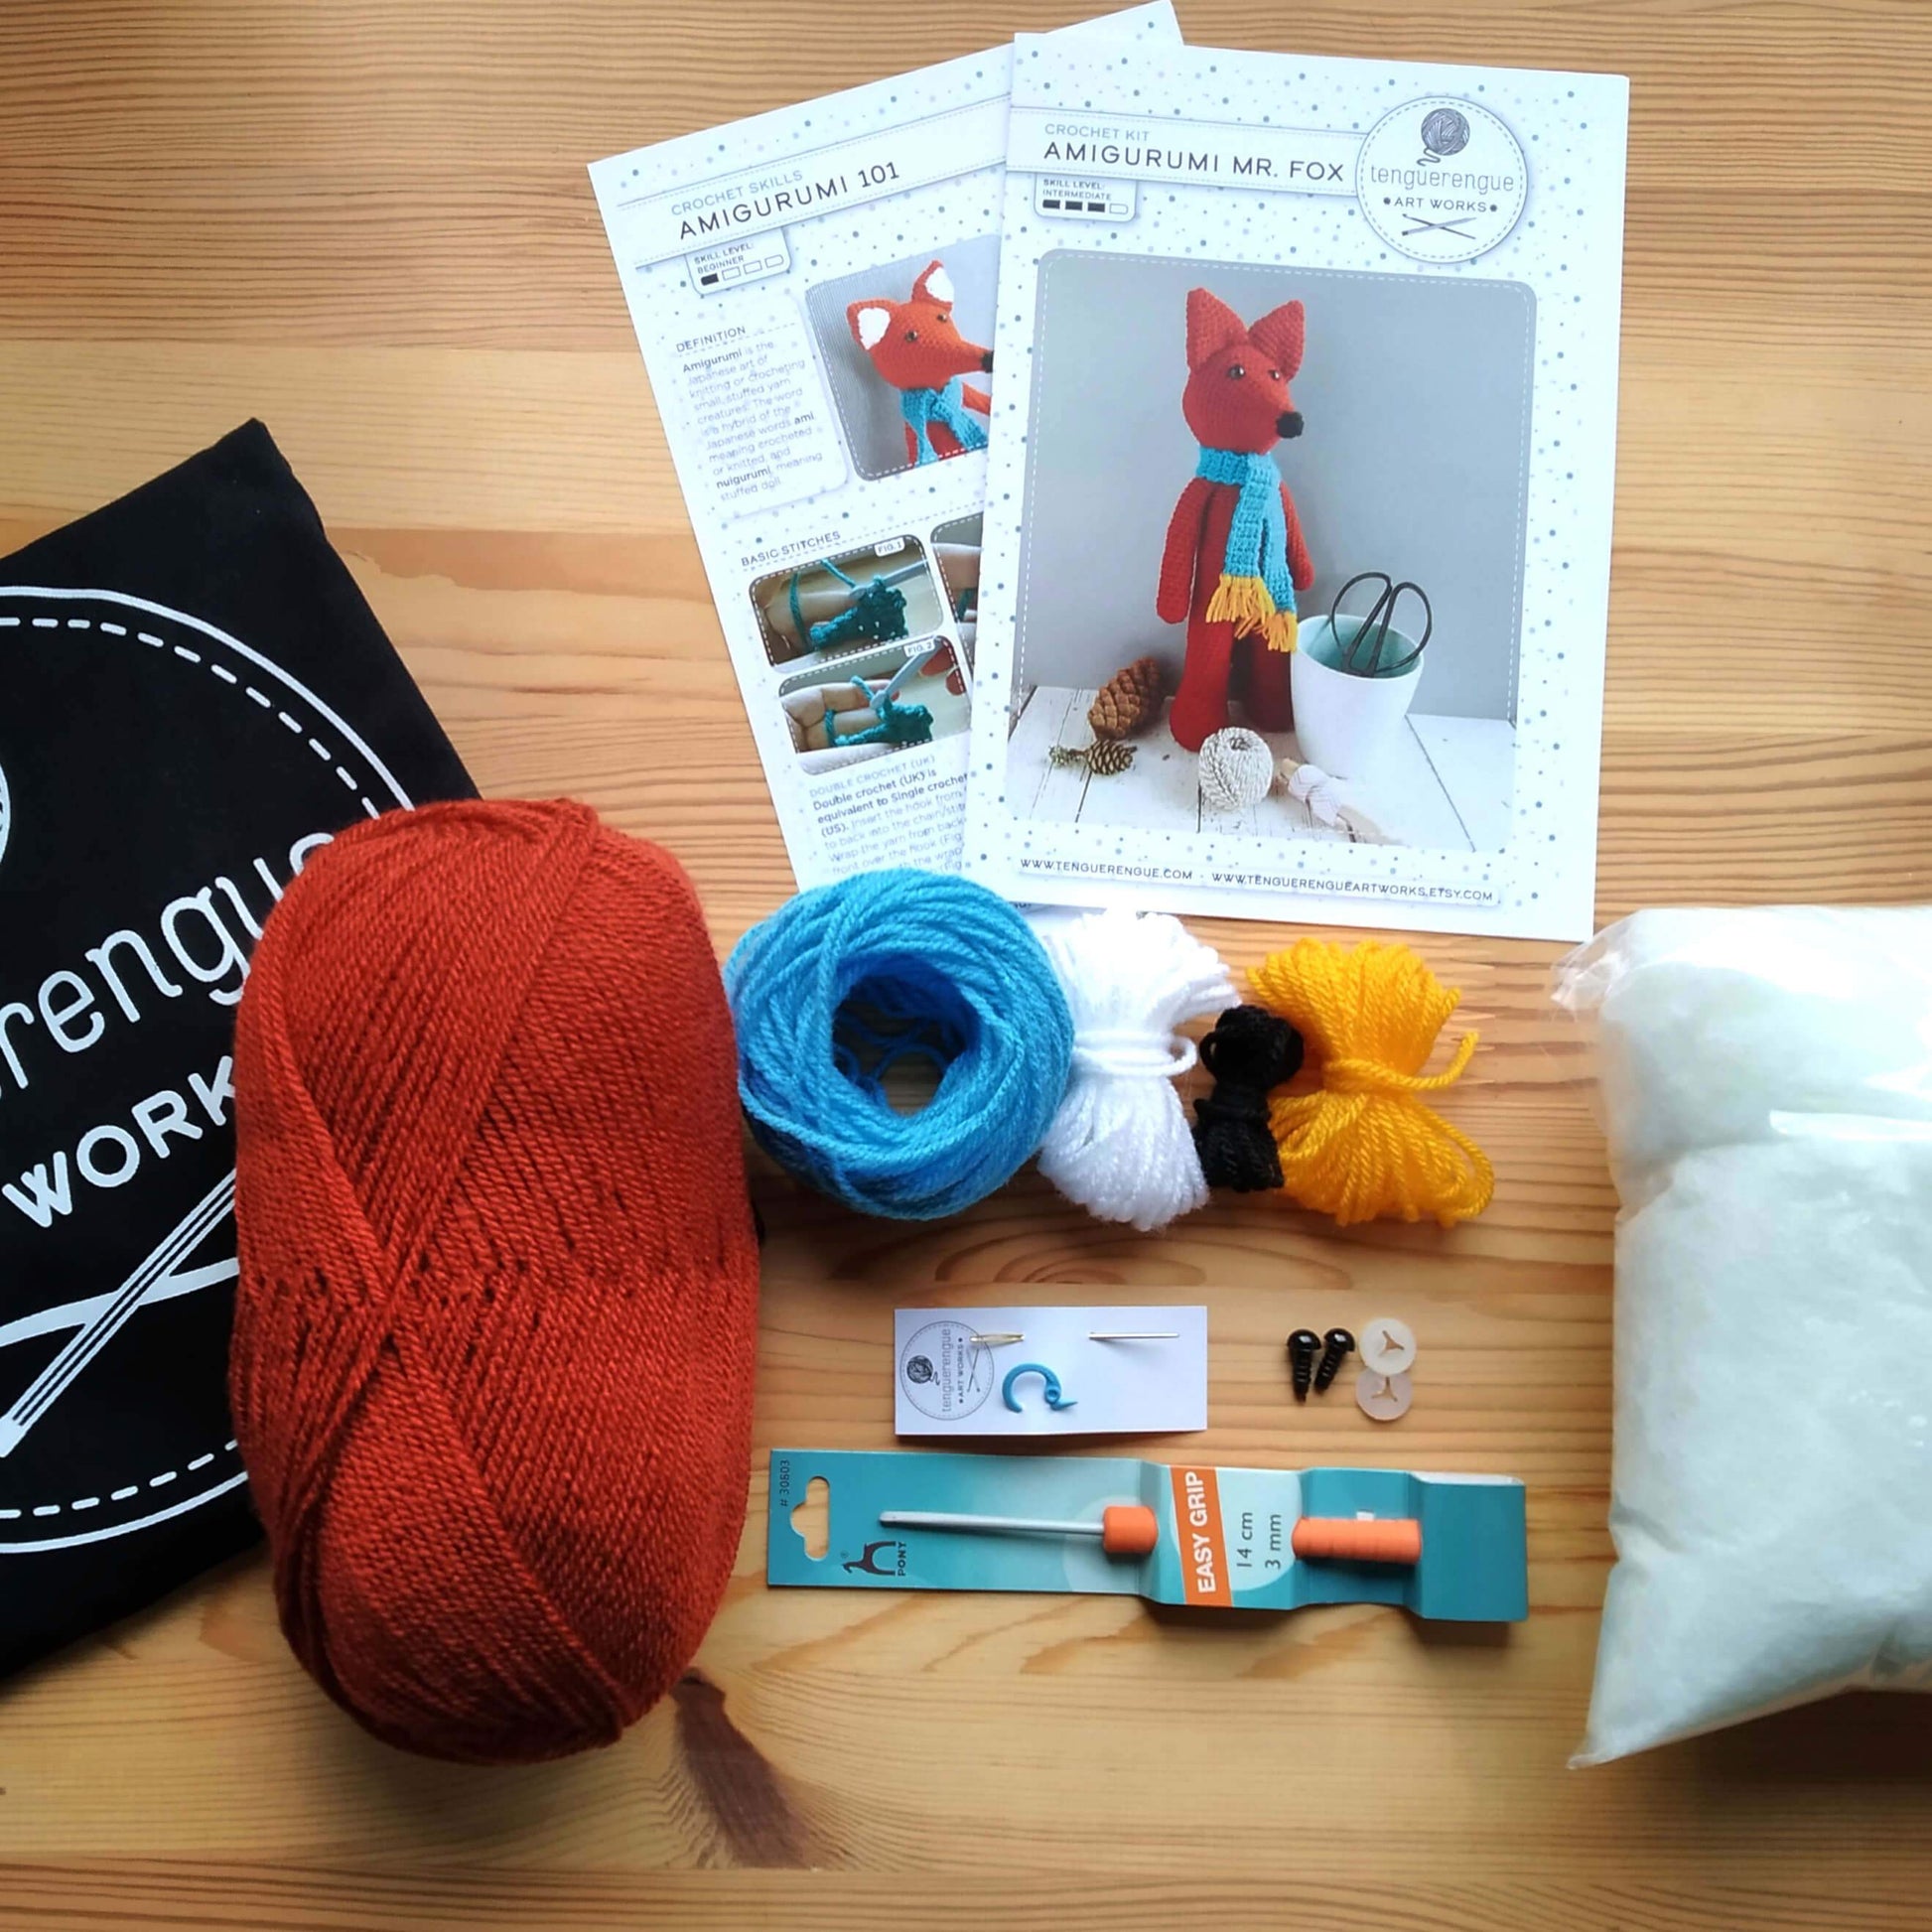 Tenguerengue Art & Craft Kits Crochet Kit : Fox